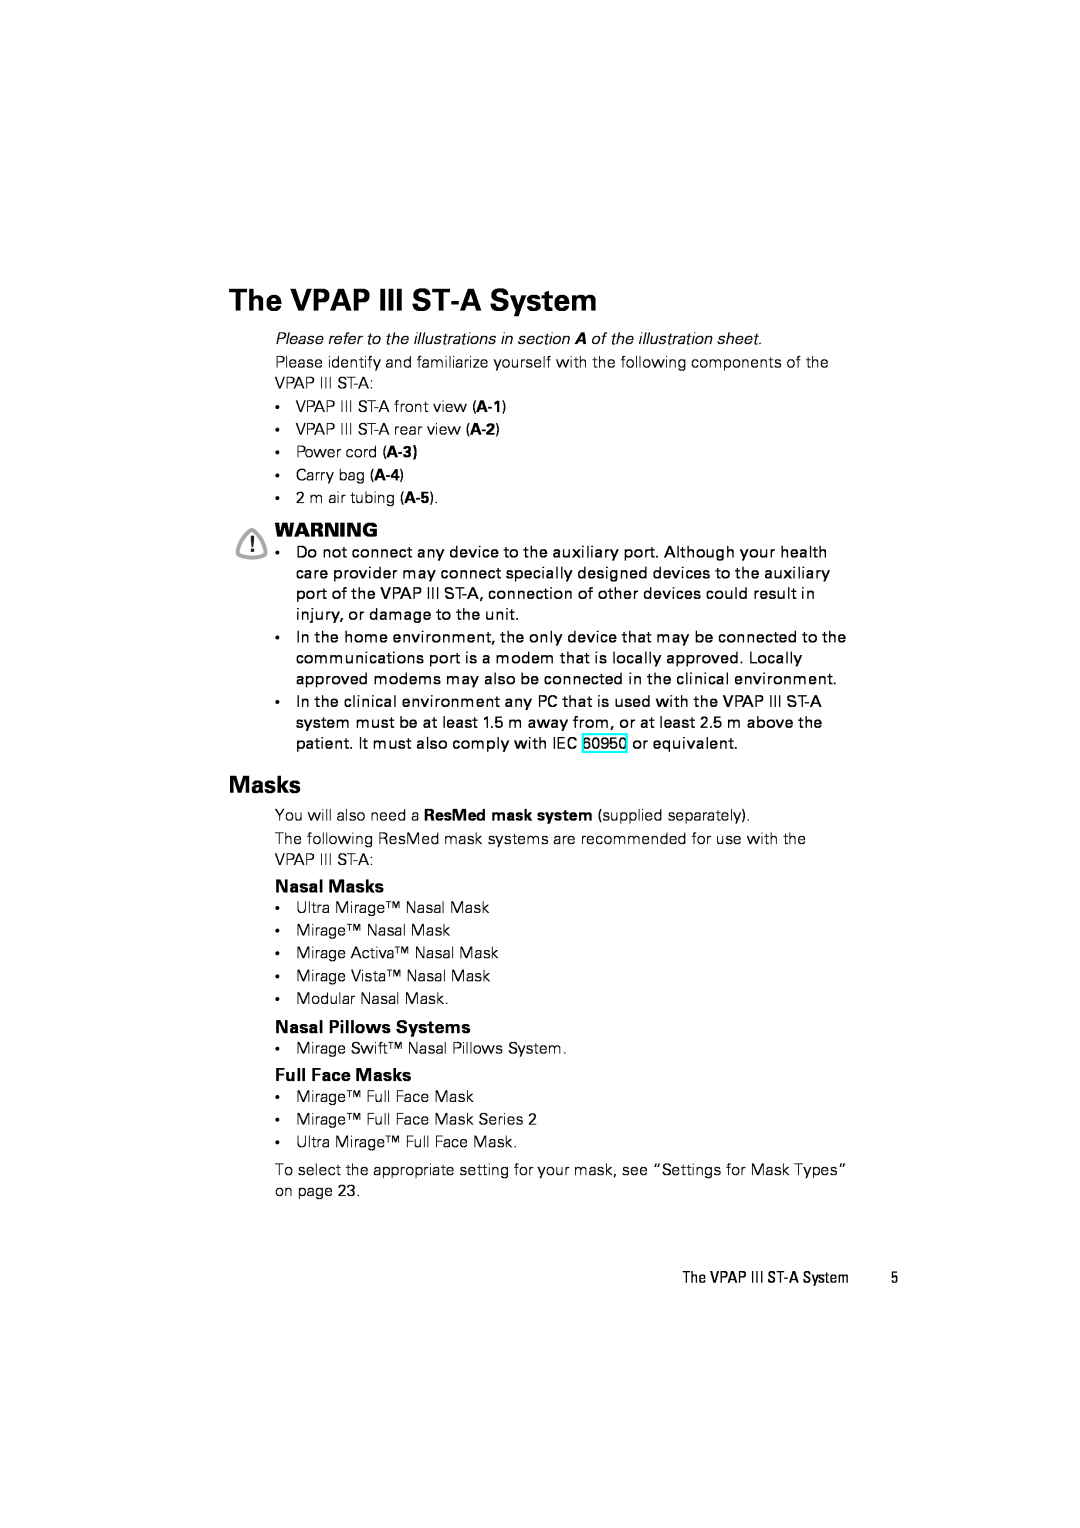 ResMed user manual The VPAP III ST-ASystem, Nasal Masks, Nasal Pillows Systems, Full Face Masks 